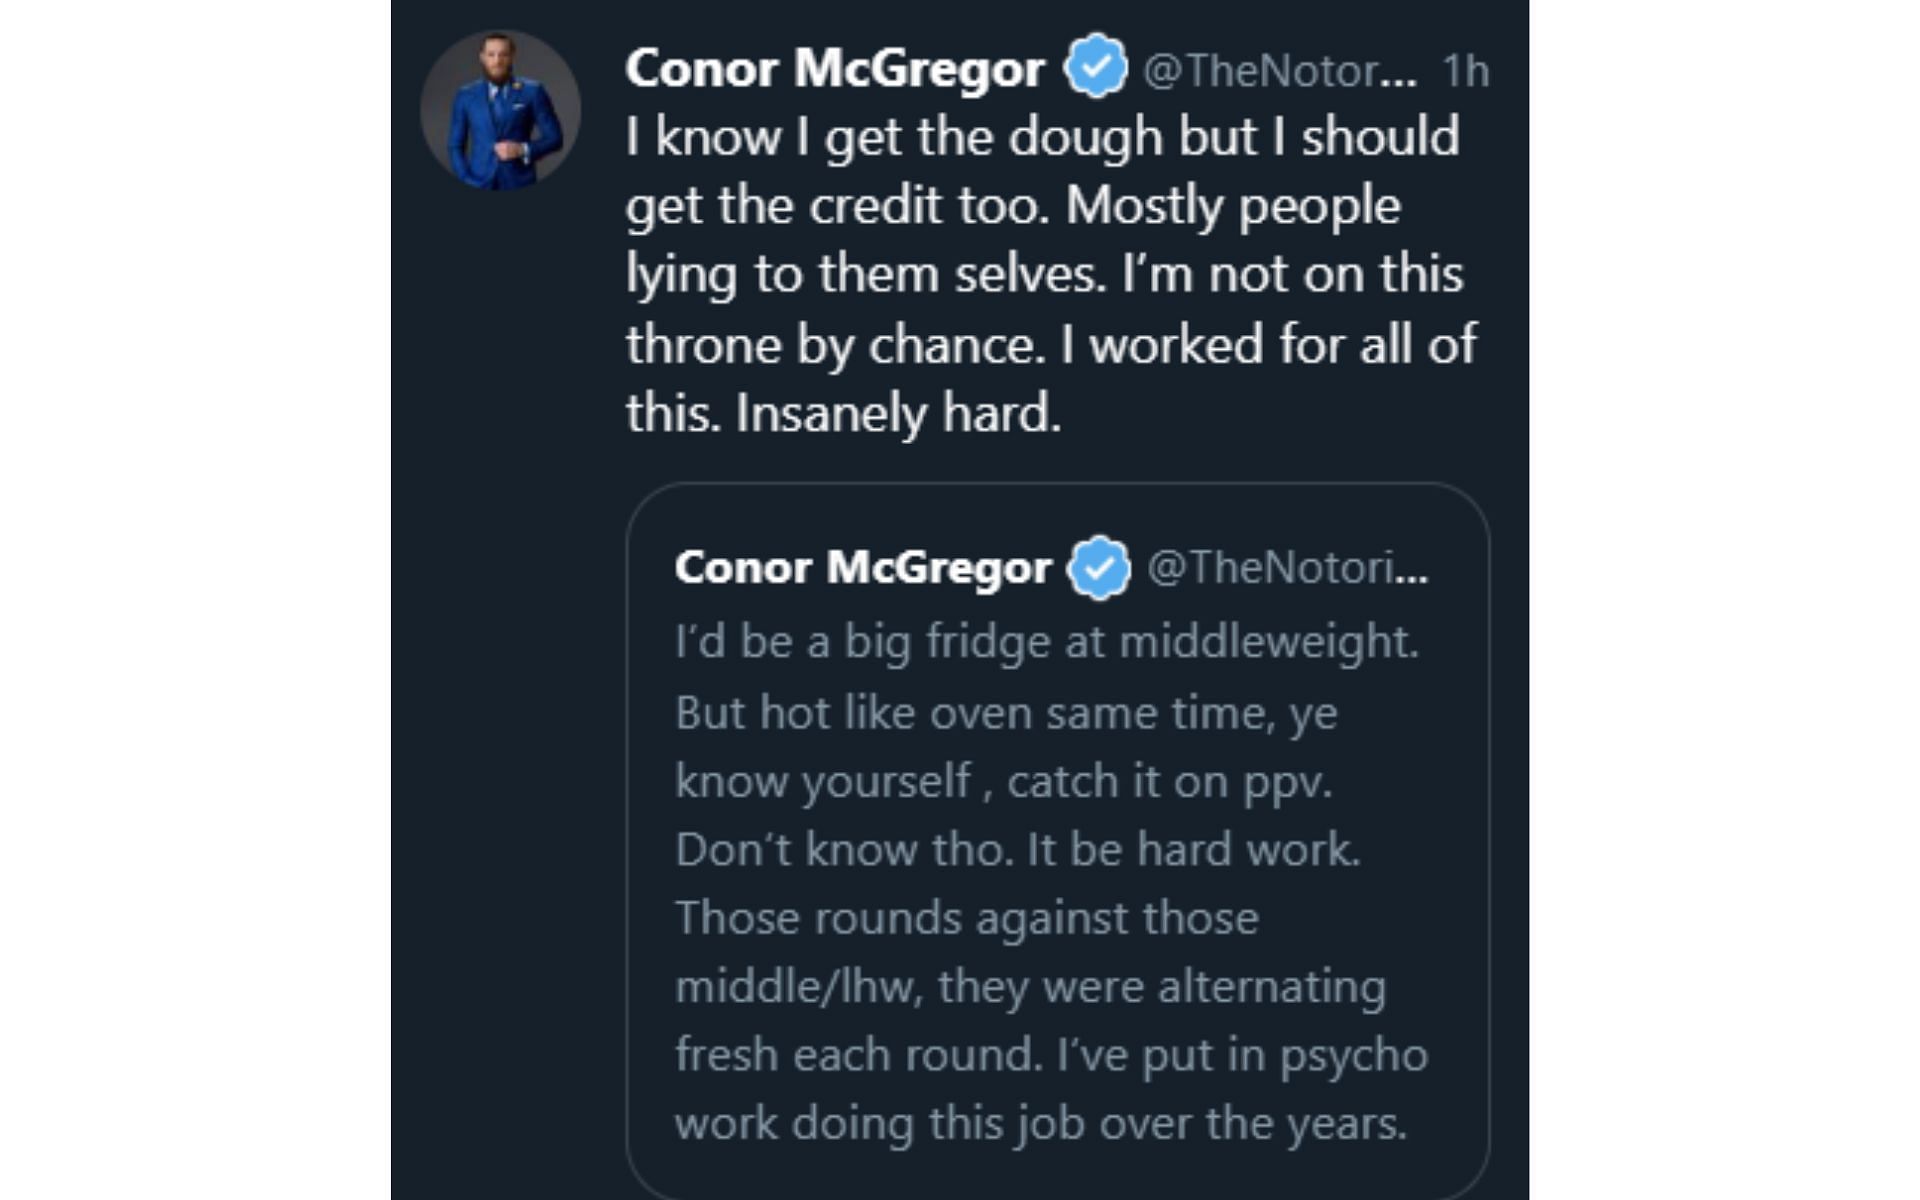 Conor McGregor demands credit for his hard work